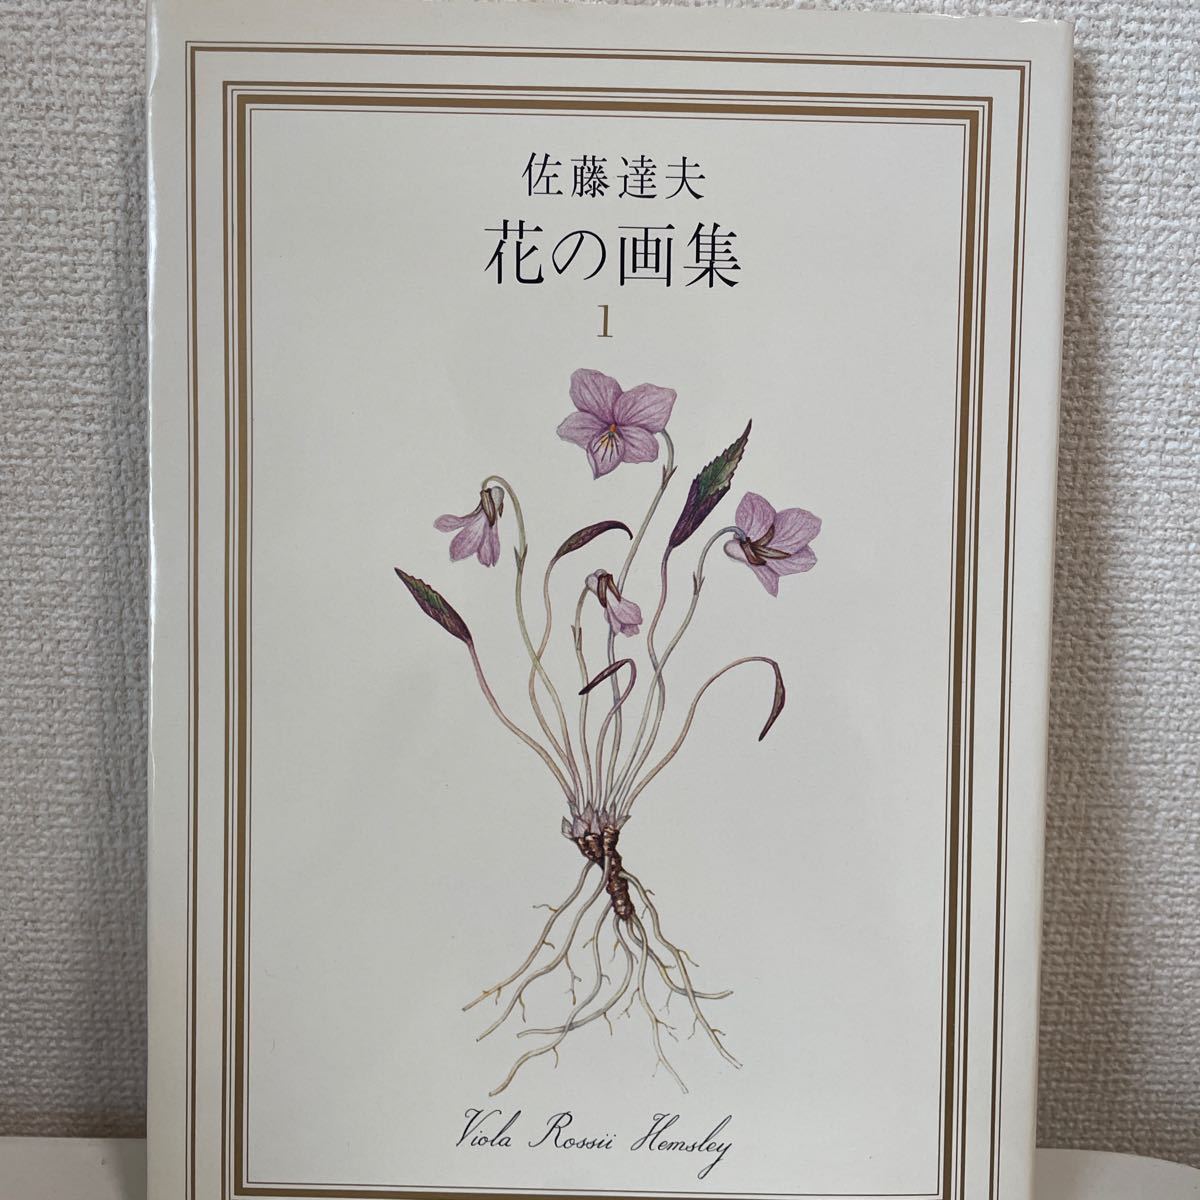 [Tatsuo Sato Flower Art Book 1] Chunichi Shimbun Tokyo Headquarters 1971 Kunstbuch, Malerei, Kunstbuch, Sammlung, Kunstbuch